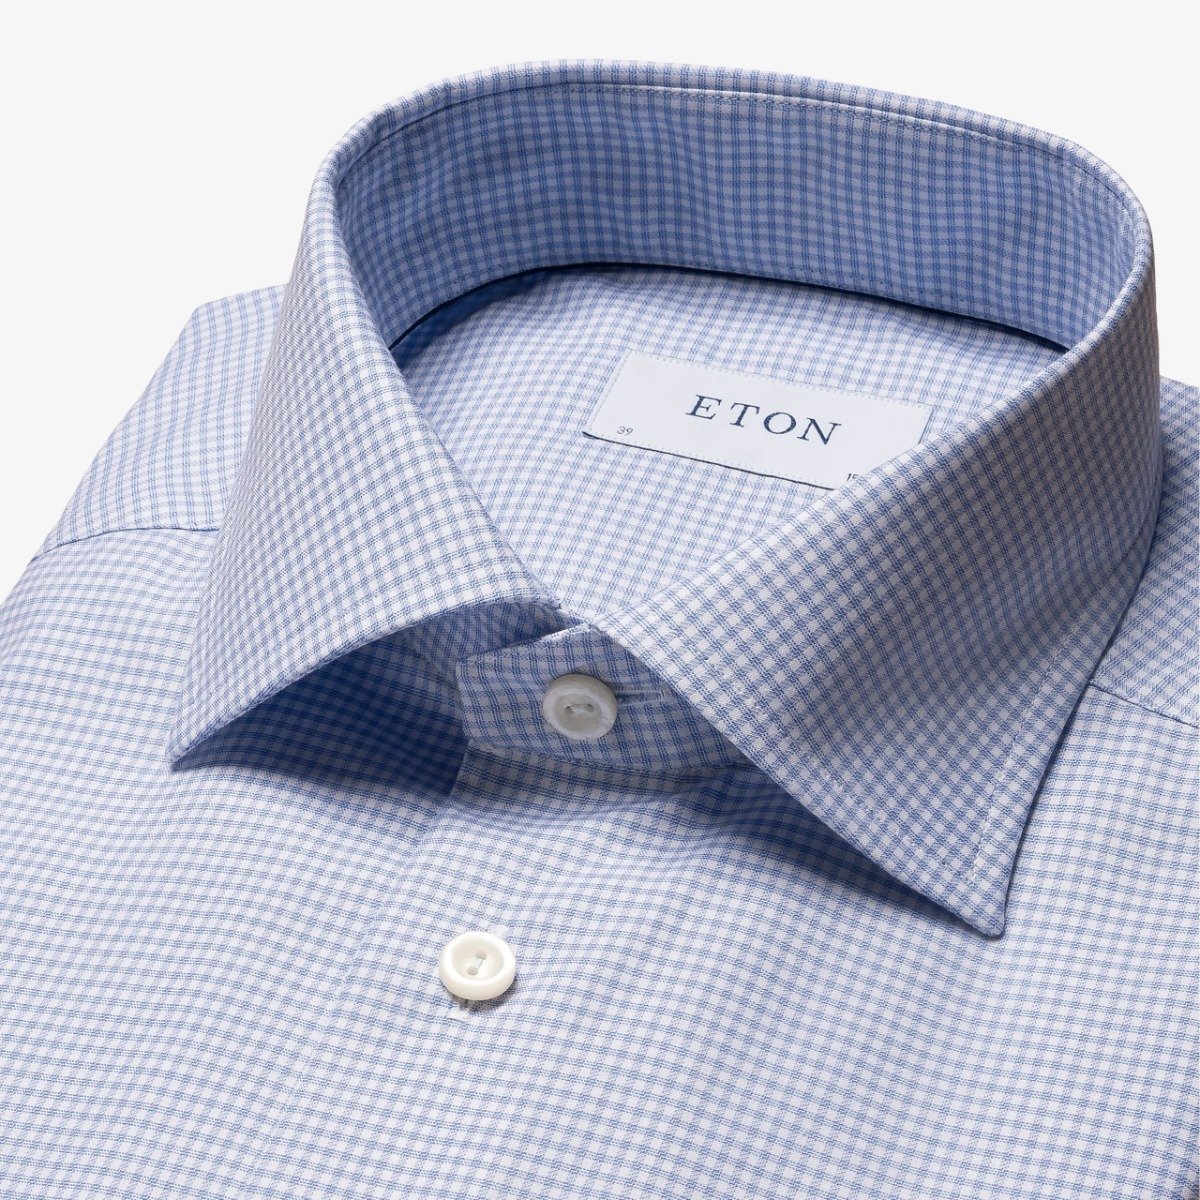 Eton light blue slim fit microcheck twill men's dress shirt